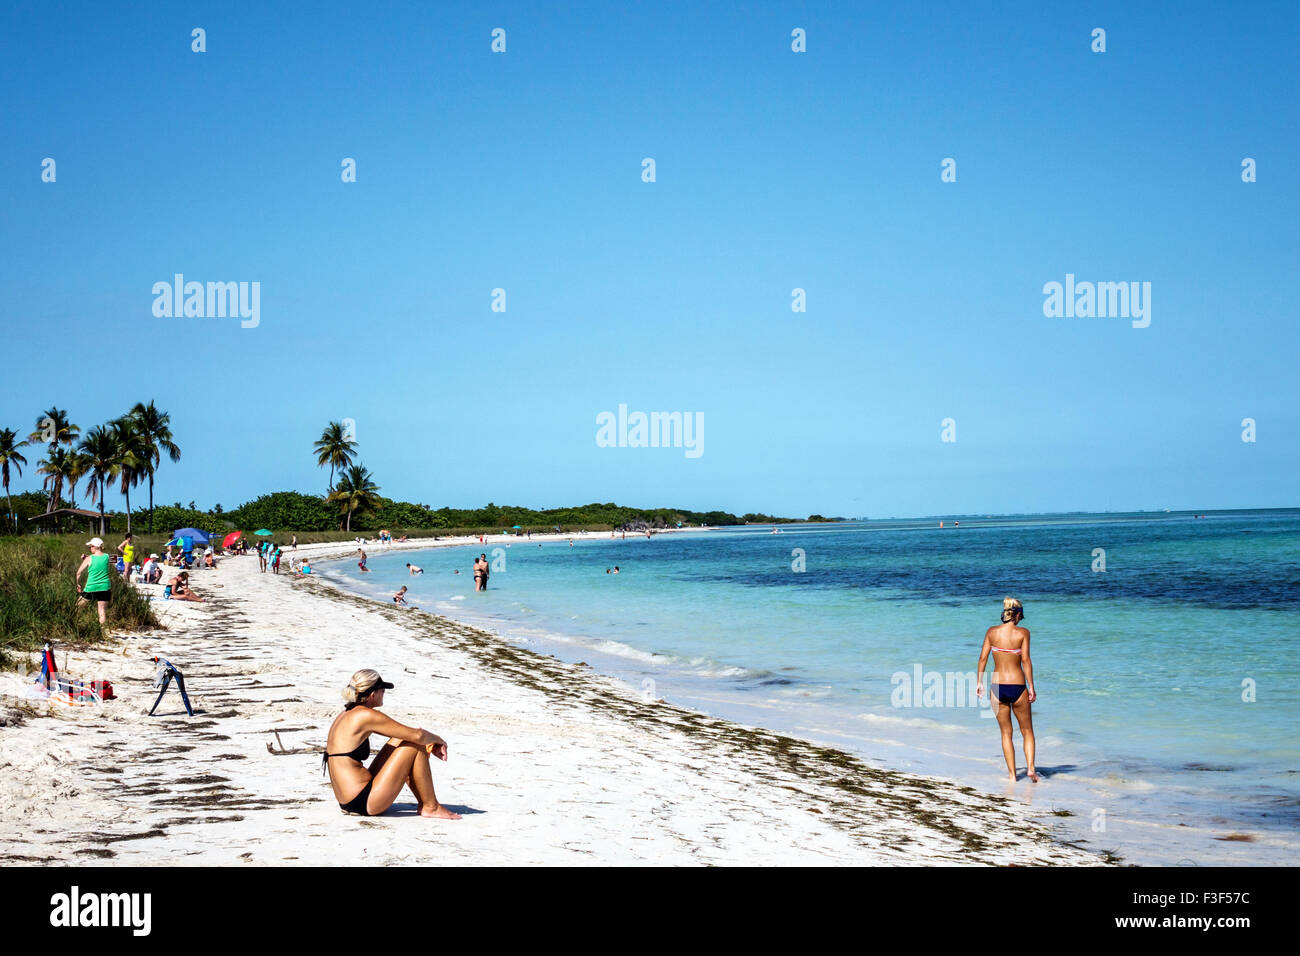 Florida Keys,Big Pine Key,Bahia Honda State Park,Atlantic Ocean,beach,sunbathers,FL150508043 Stock Photo